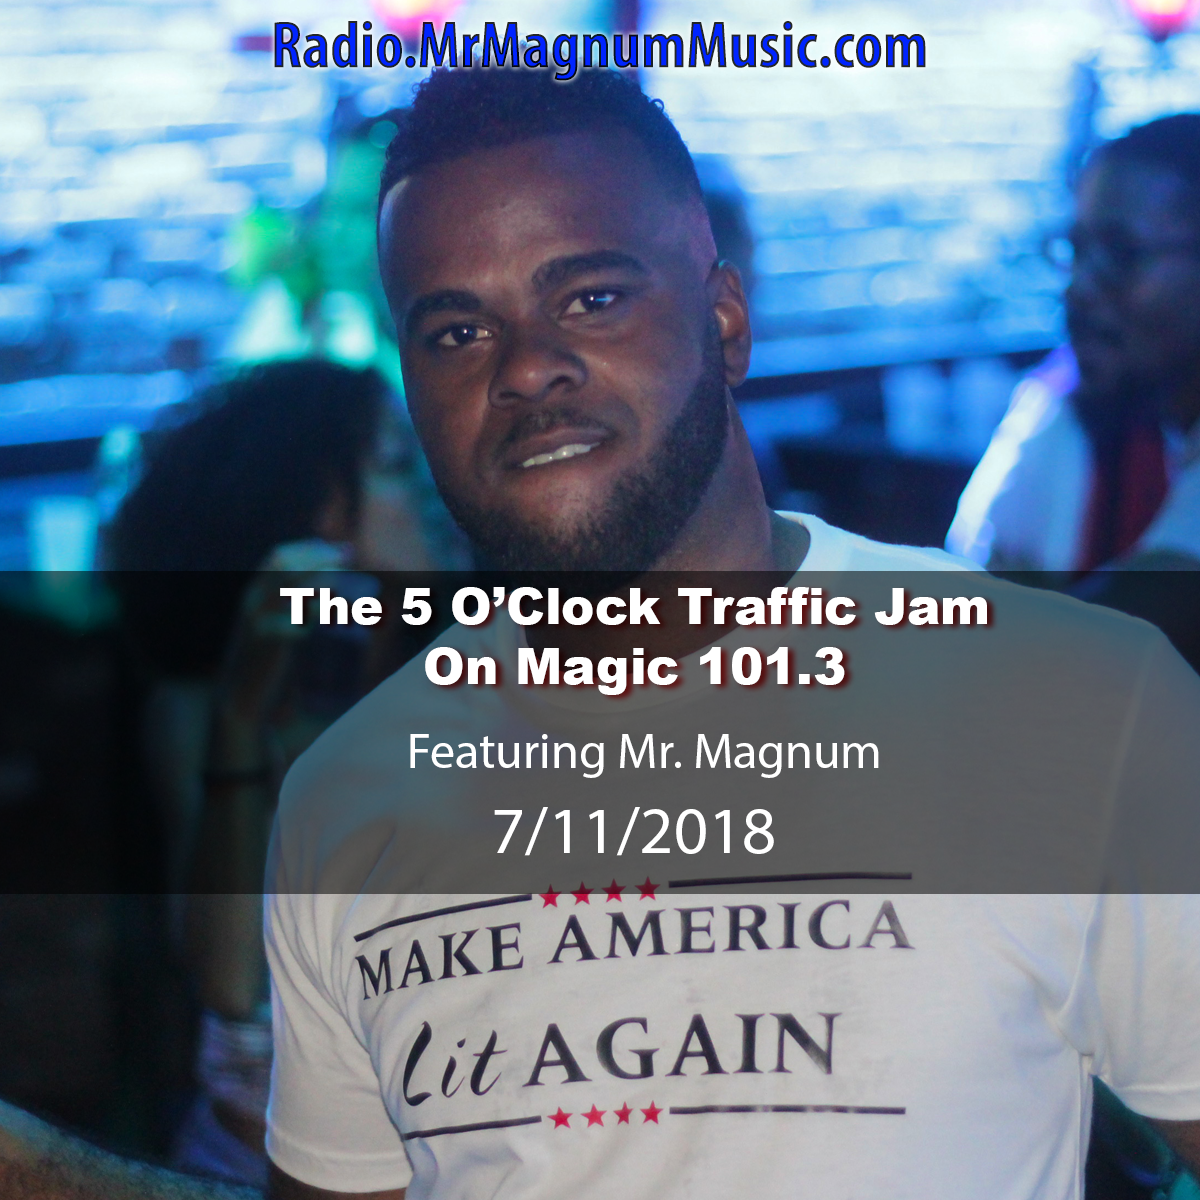 The 5 O'Clock Traffic Jam 20180711 featuring Gainesville's #1 DJ, Mr. Magnum on Magic 101.3